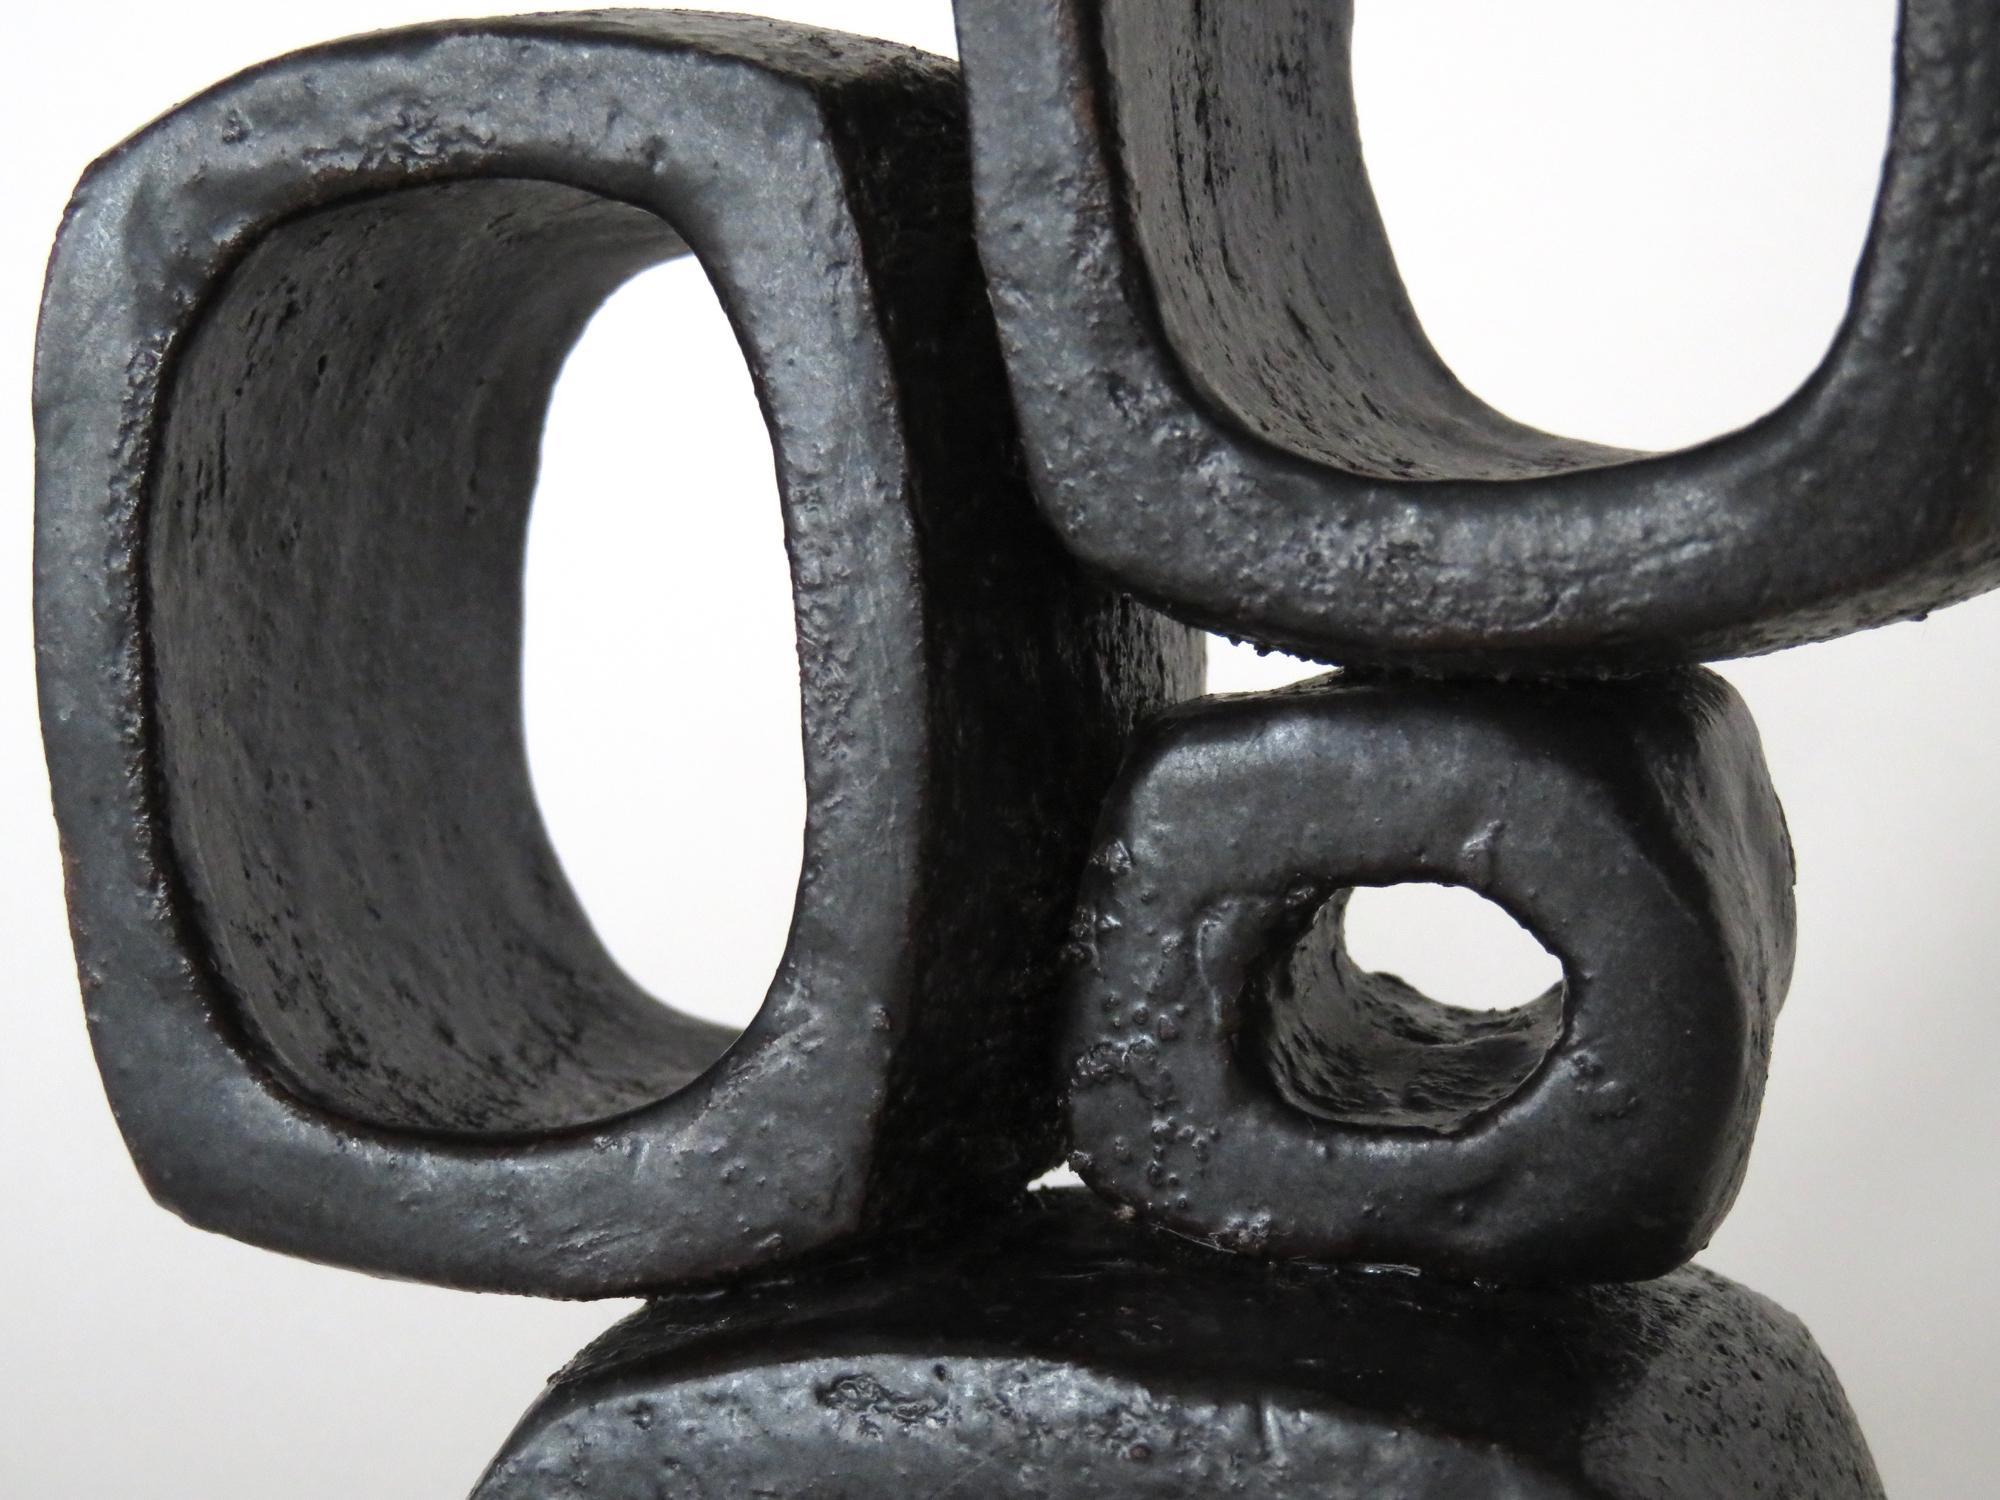 Glazed Modern TOTEM, Metallic Black Ceramic Sculpture with 2 Rings, 1 Knot  Handbuilt